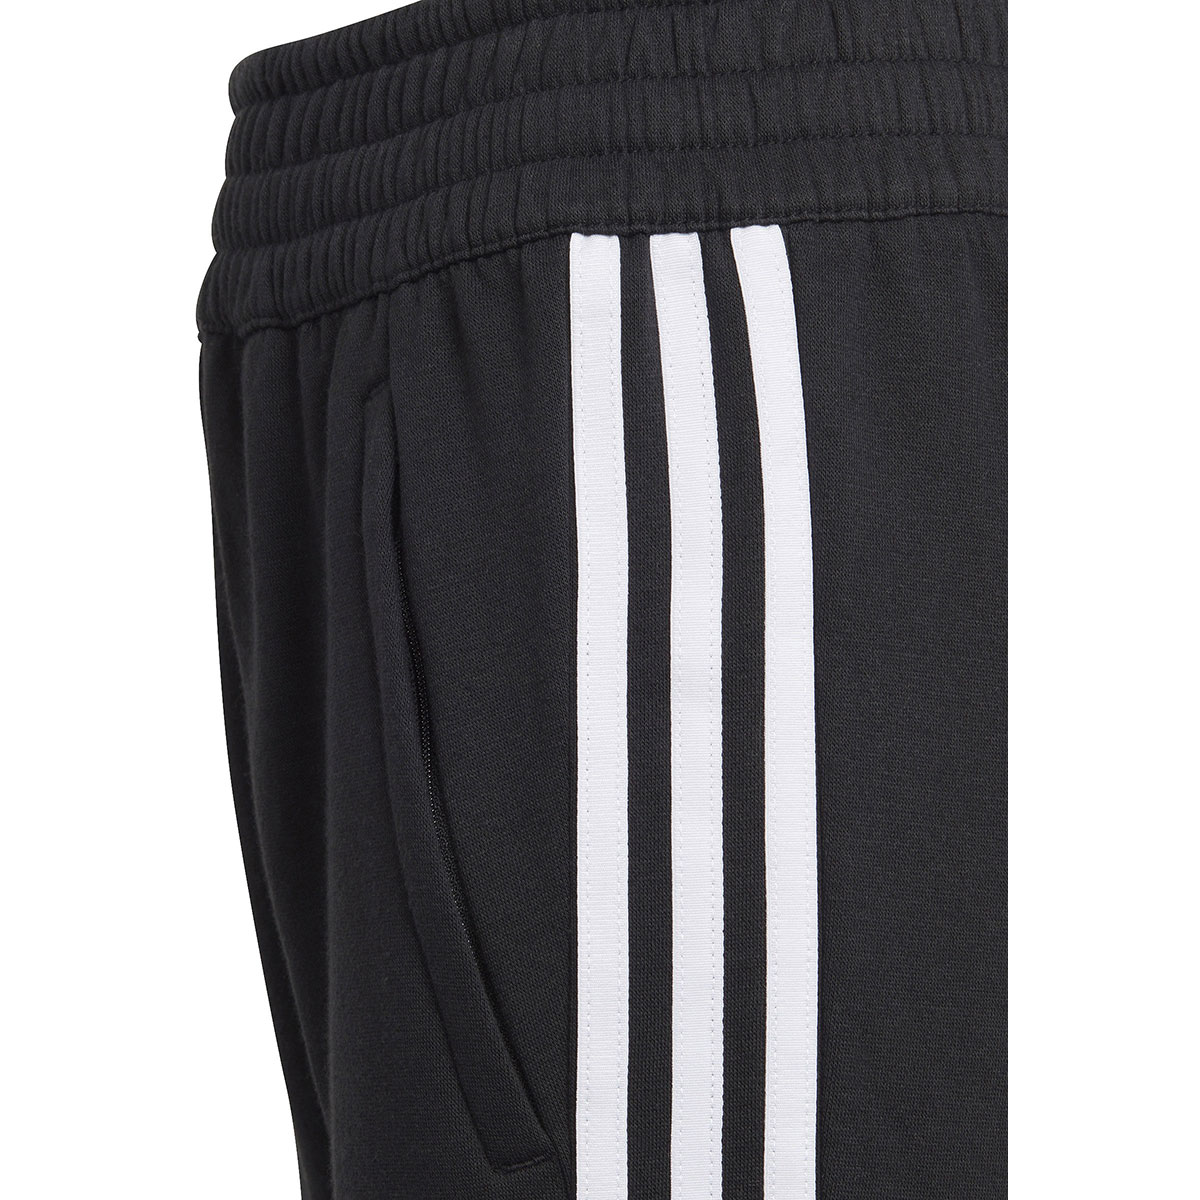 Adidas Kinder Sweat Pants Tiro 23 schwarz